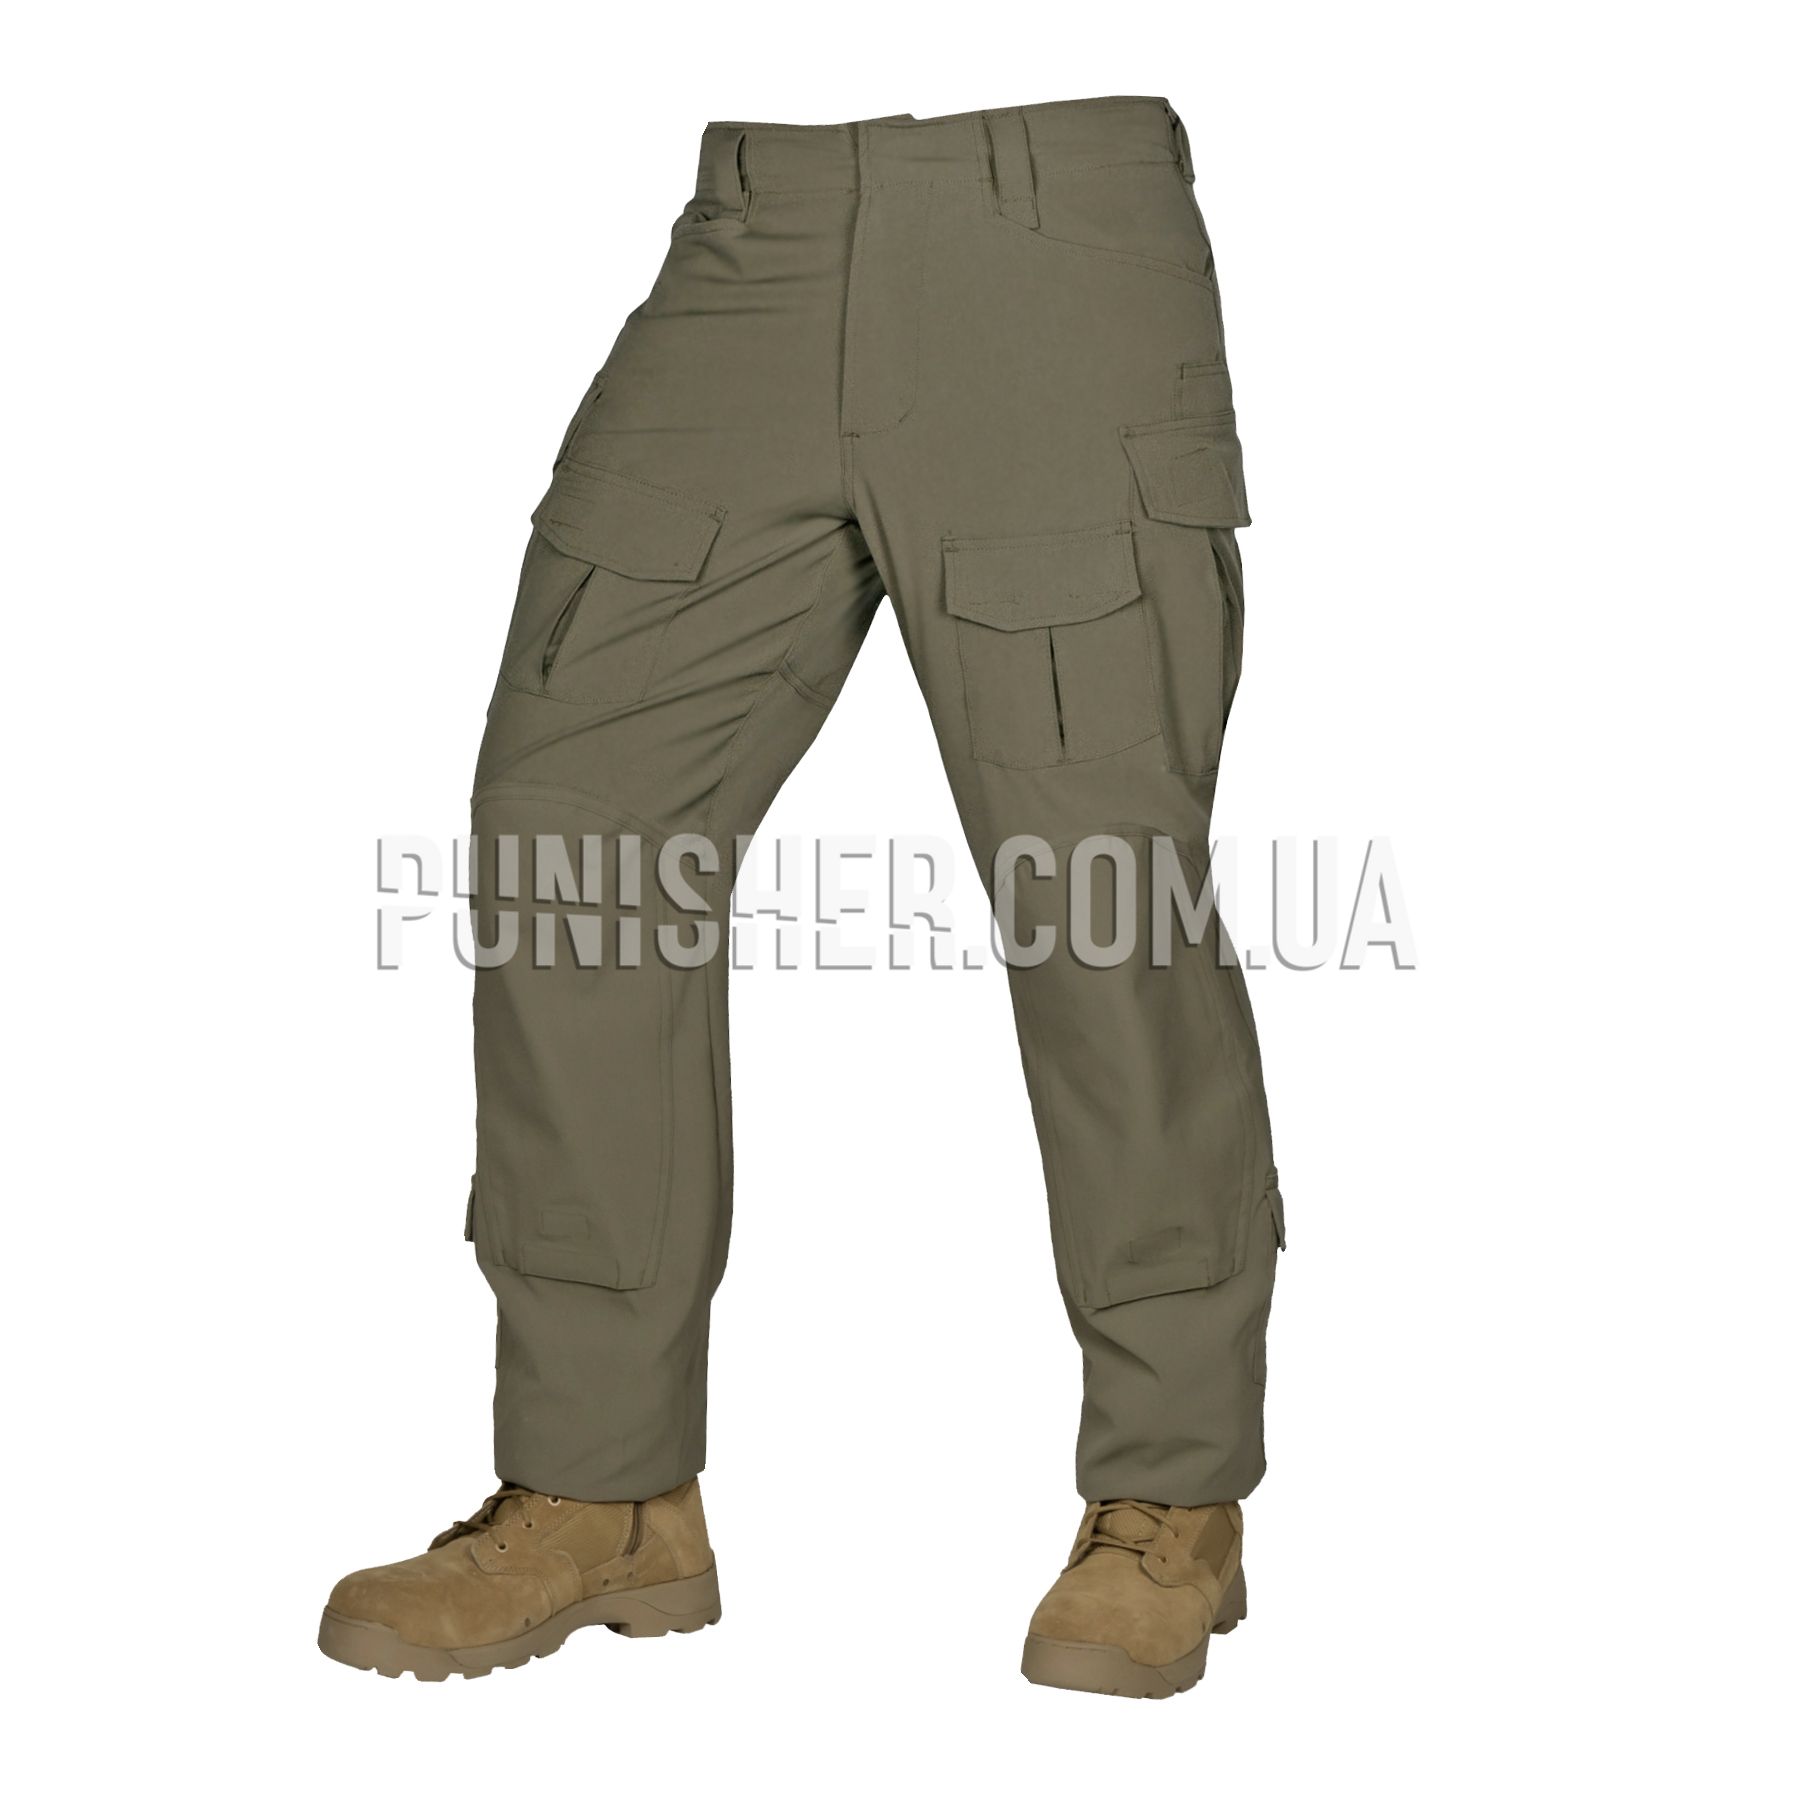 Crye Precision G3 AW Field Pants Ranger Green